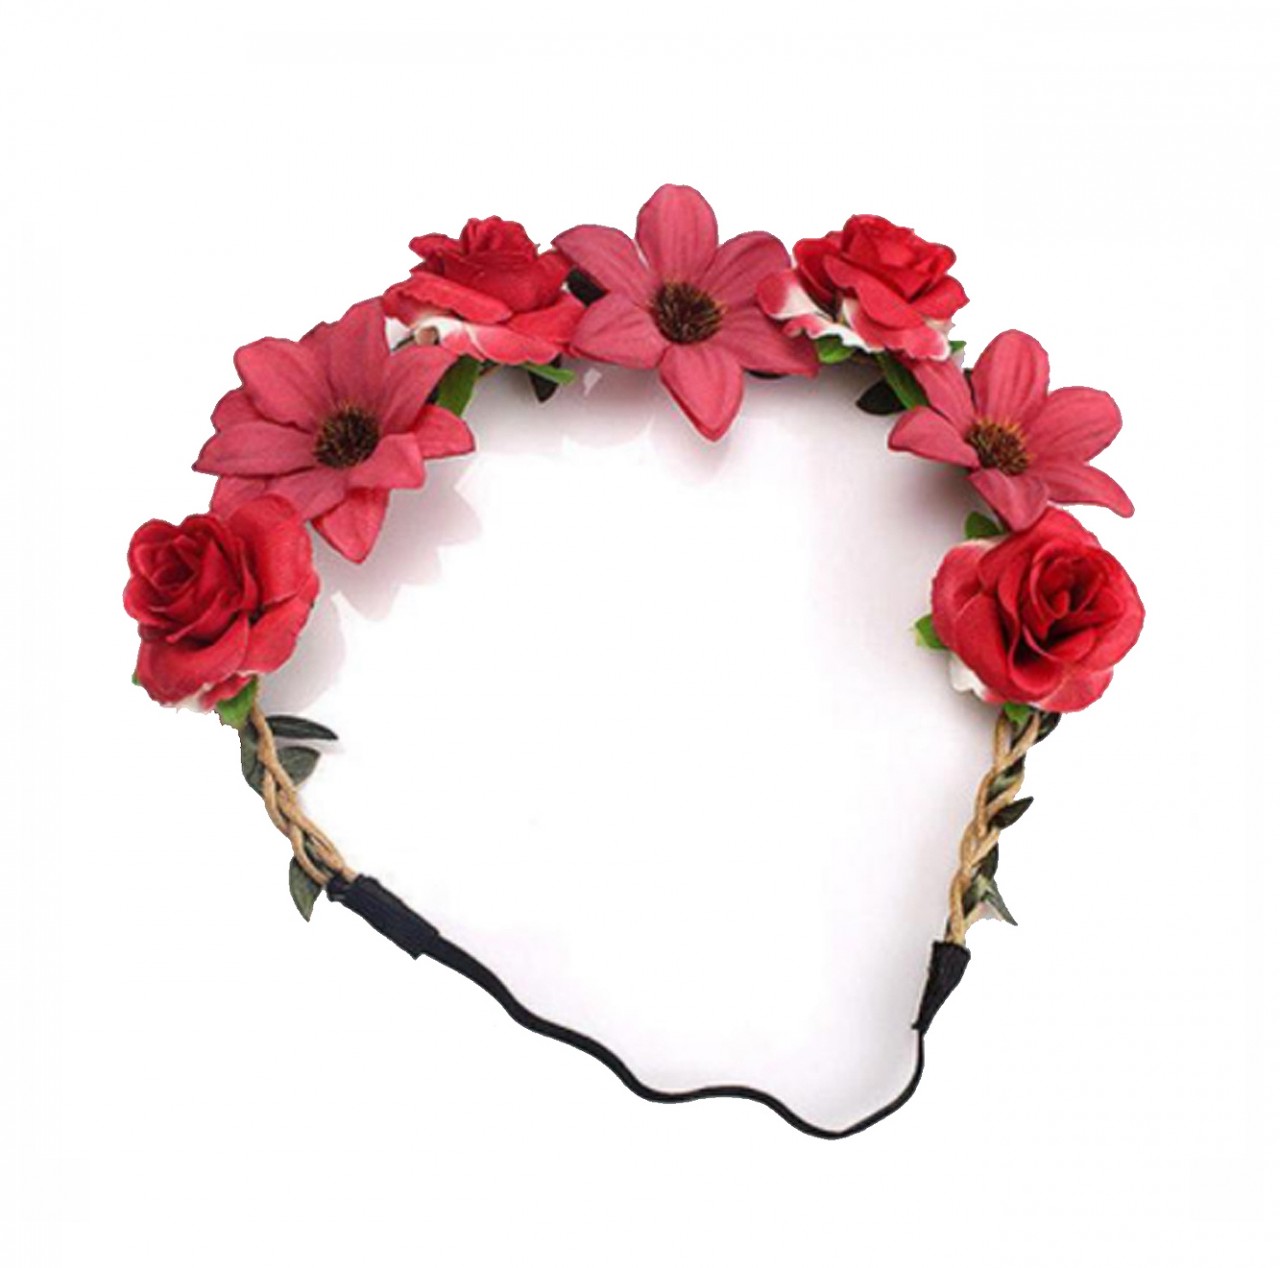 Haarband mit roten Blüten